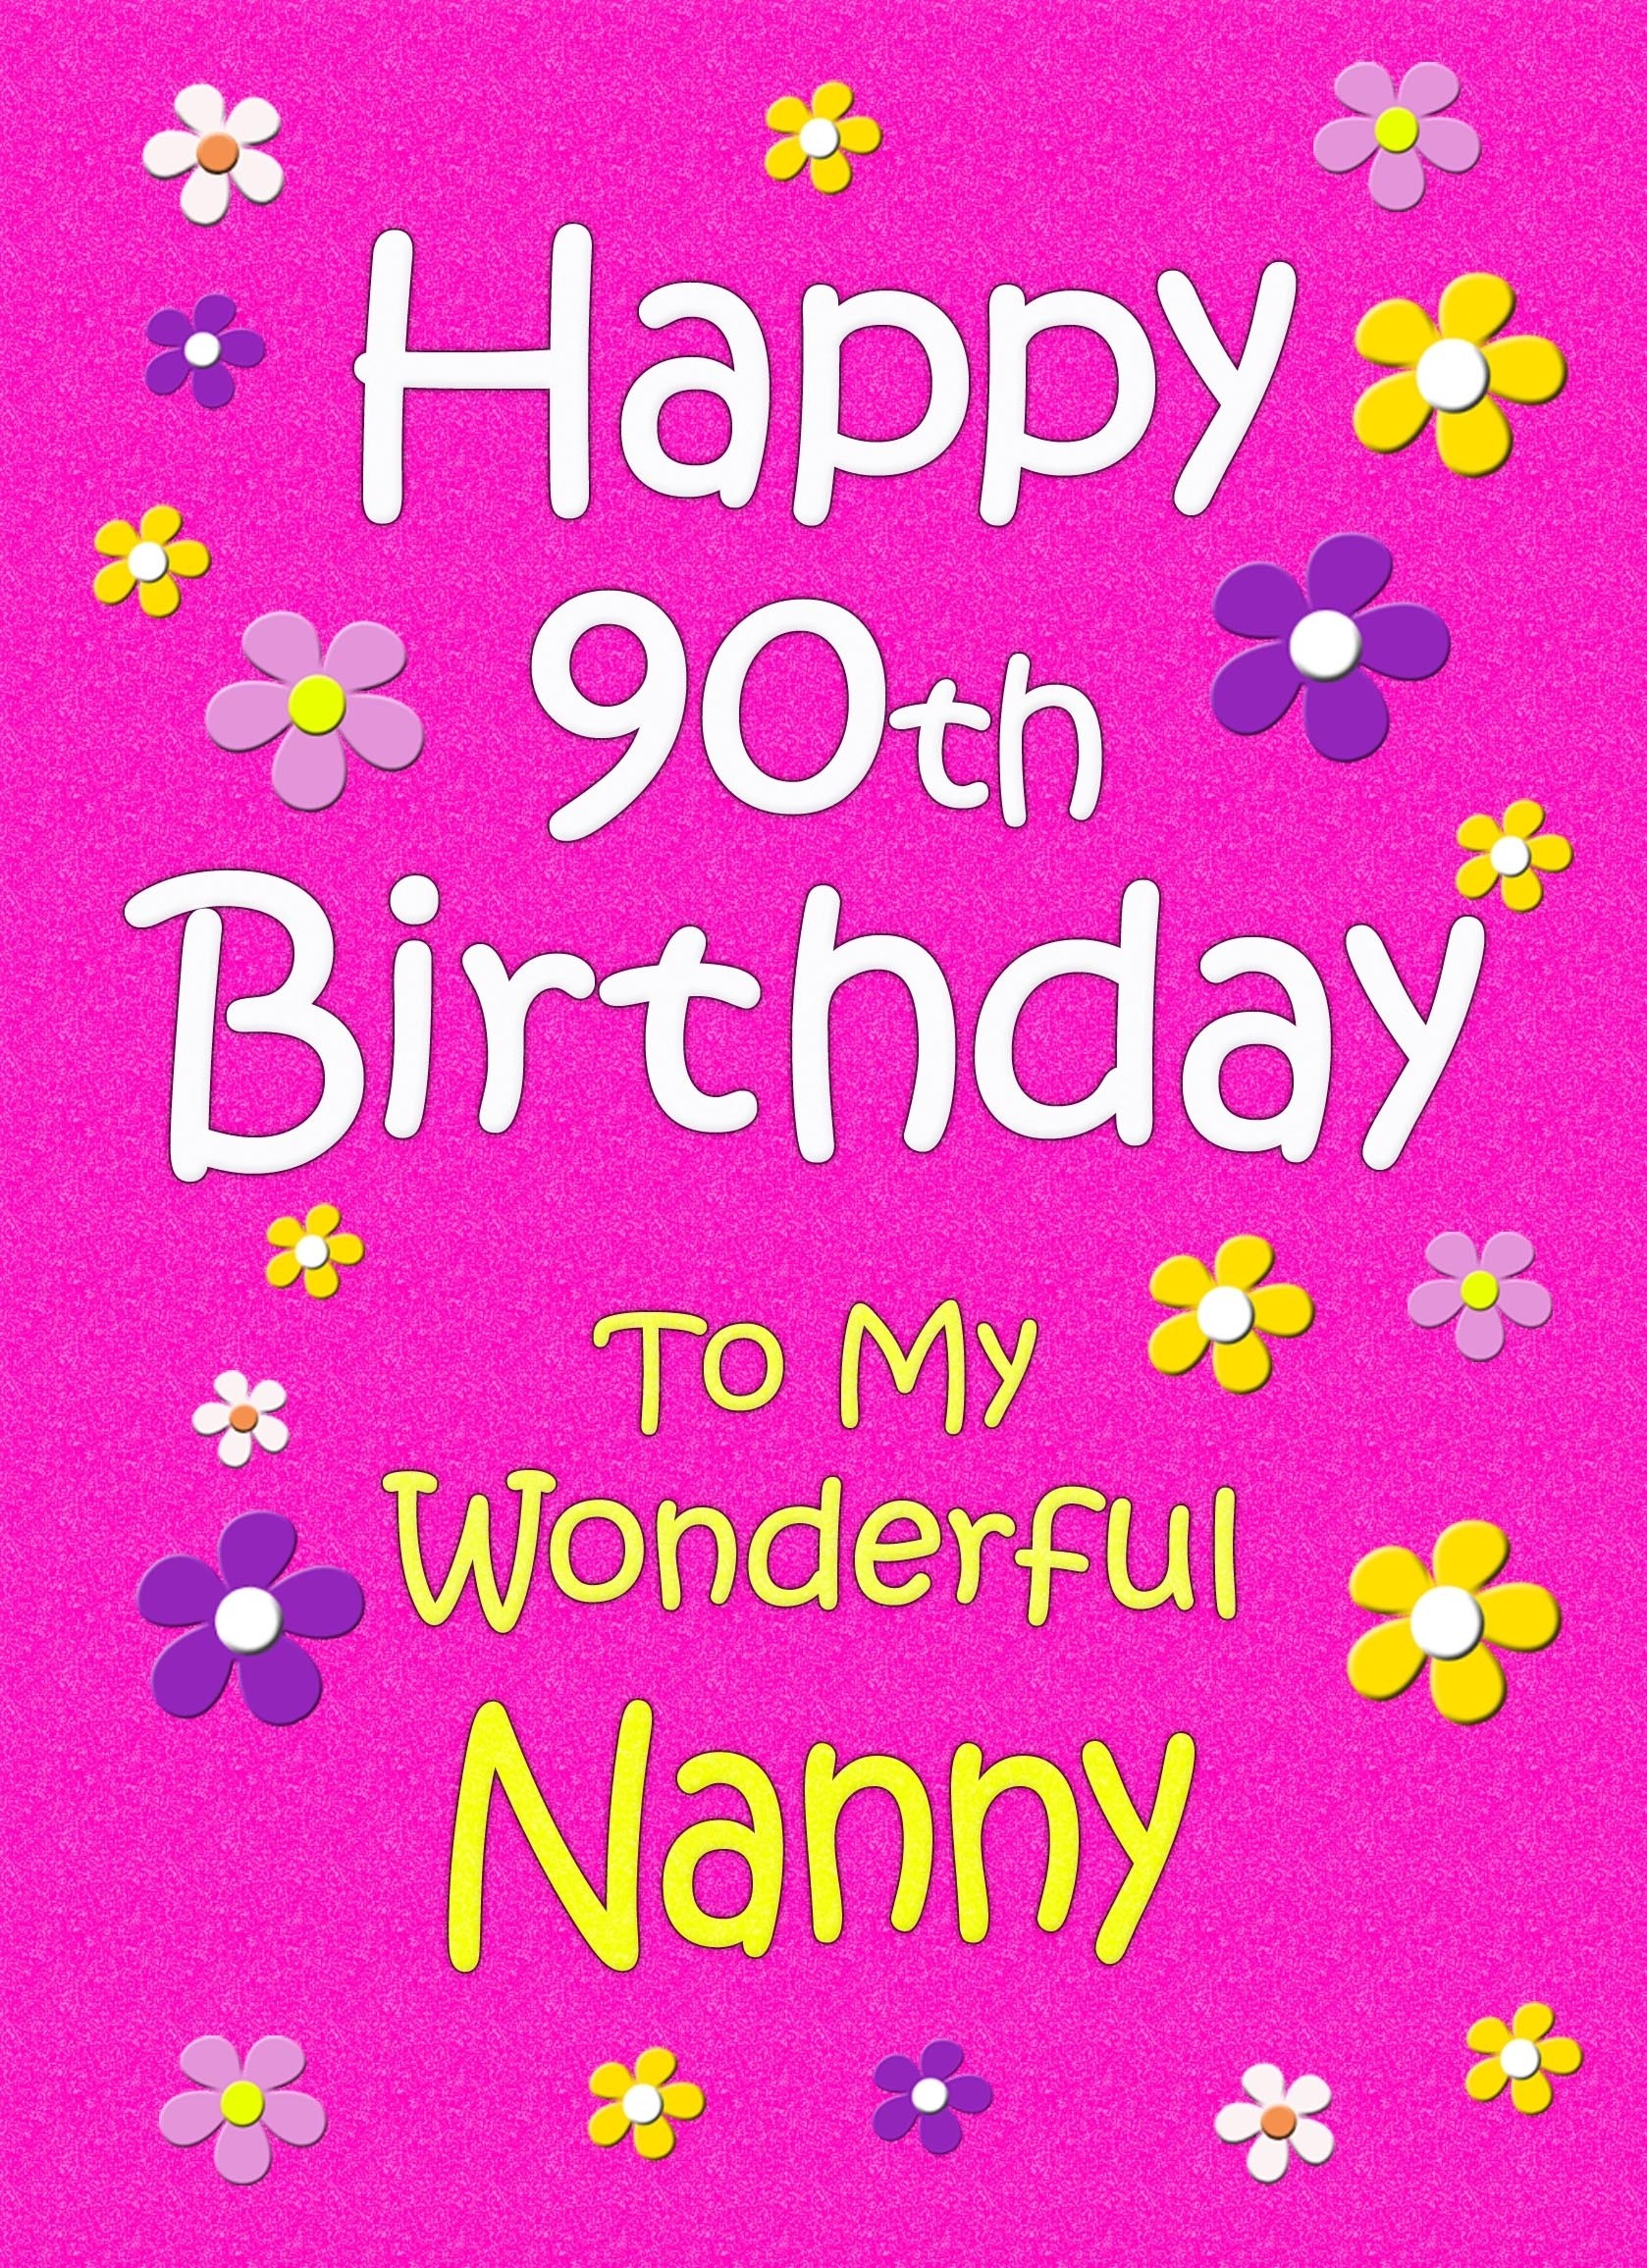 Nanny 90th Birthday Card (Pink)